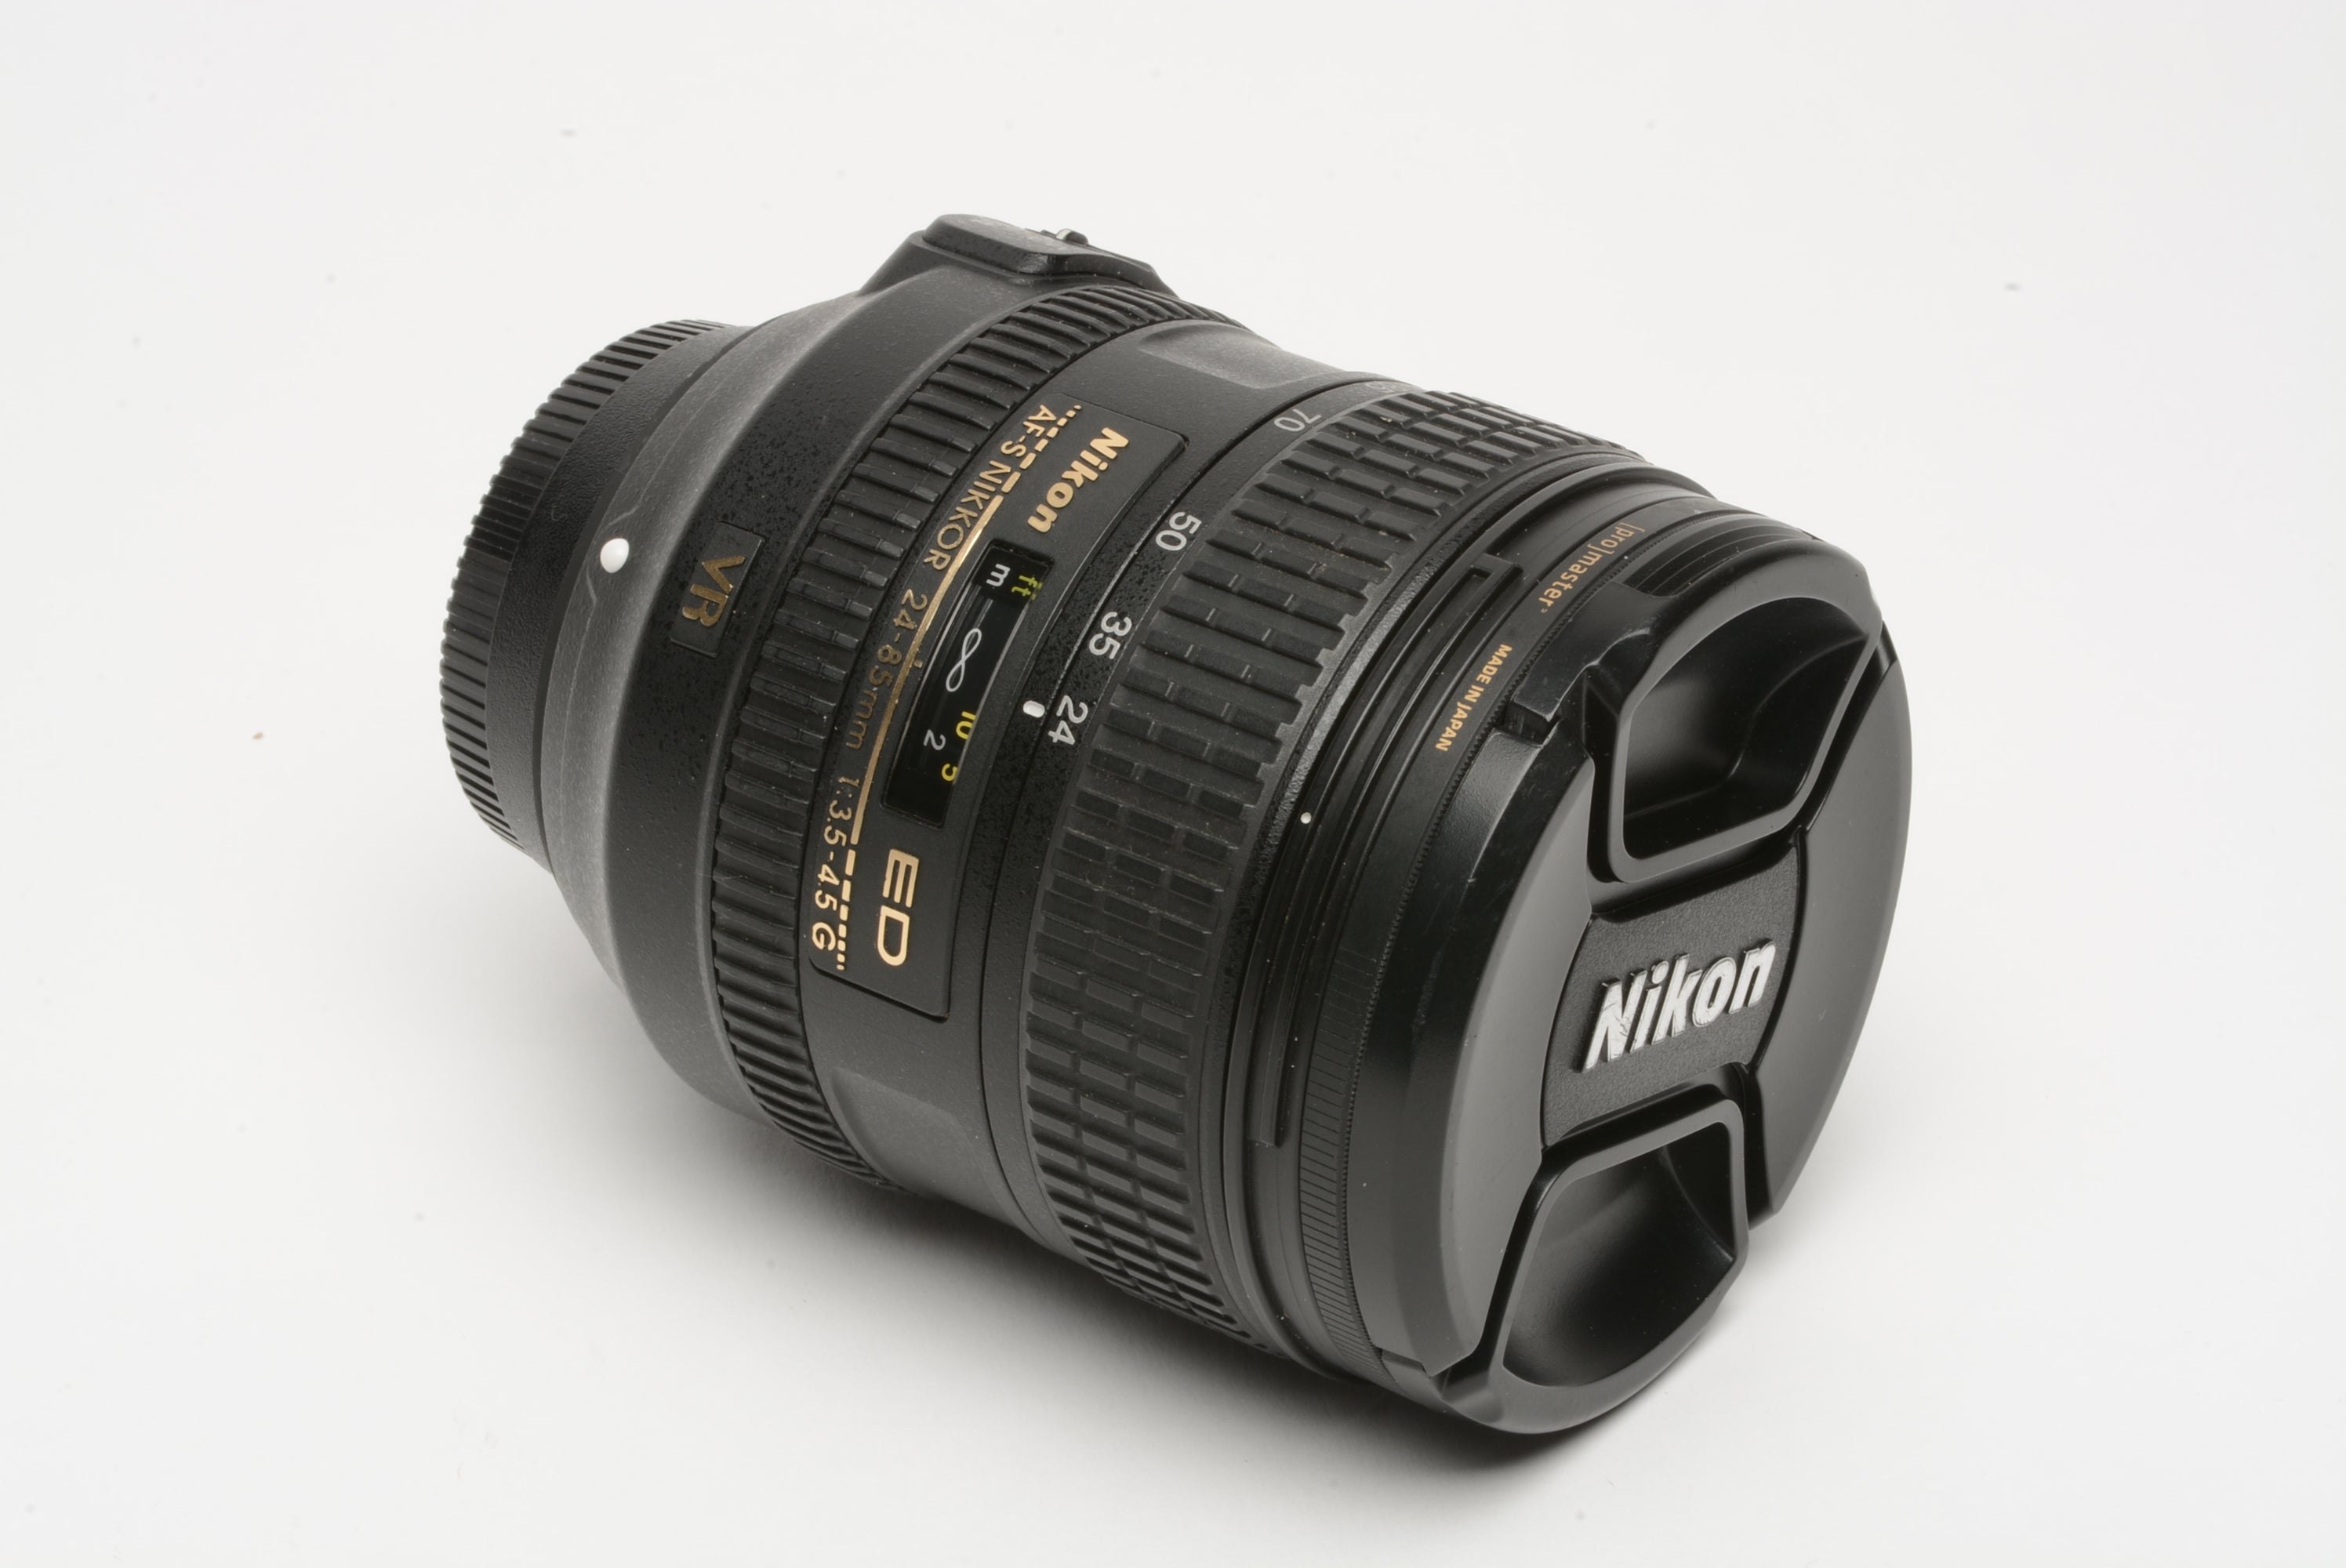 Nikon Nikkor AFS 24-85mm f3.5-4.5G ED VR zoom lens, caps, HGX UV